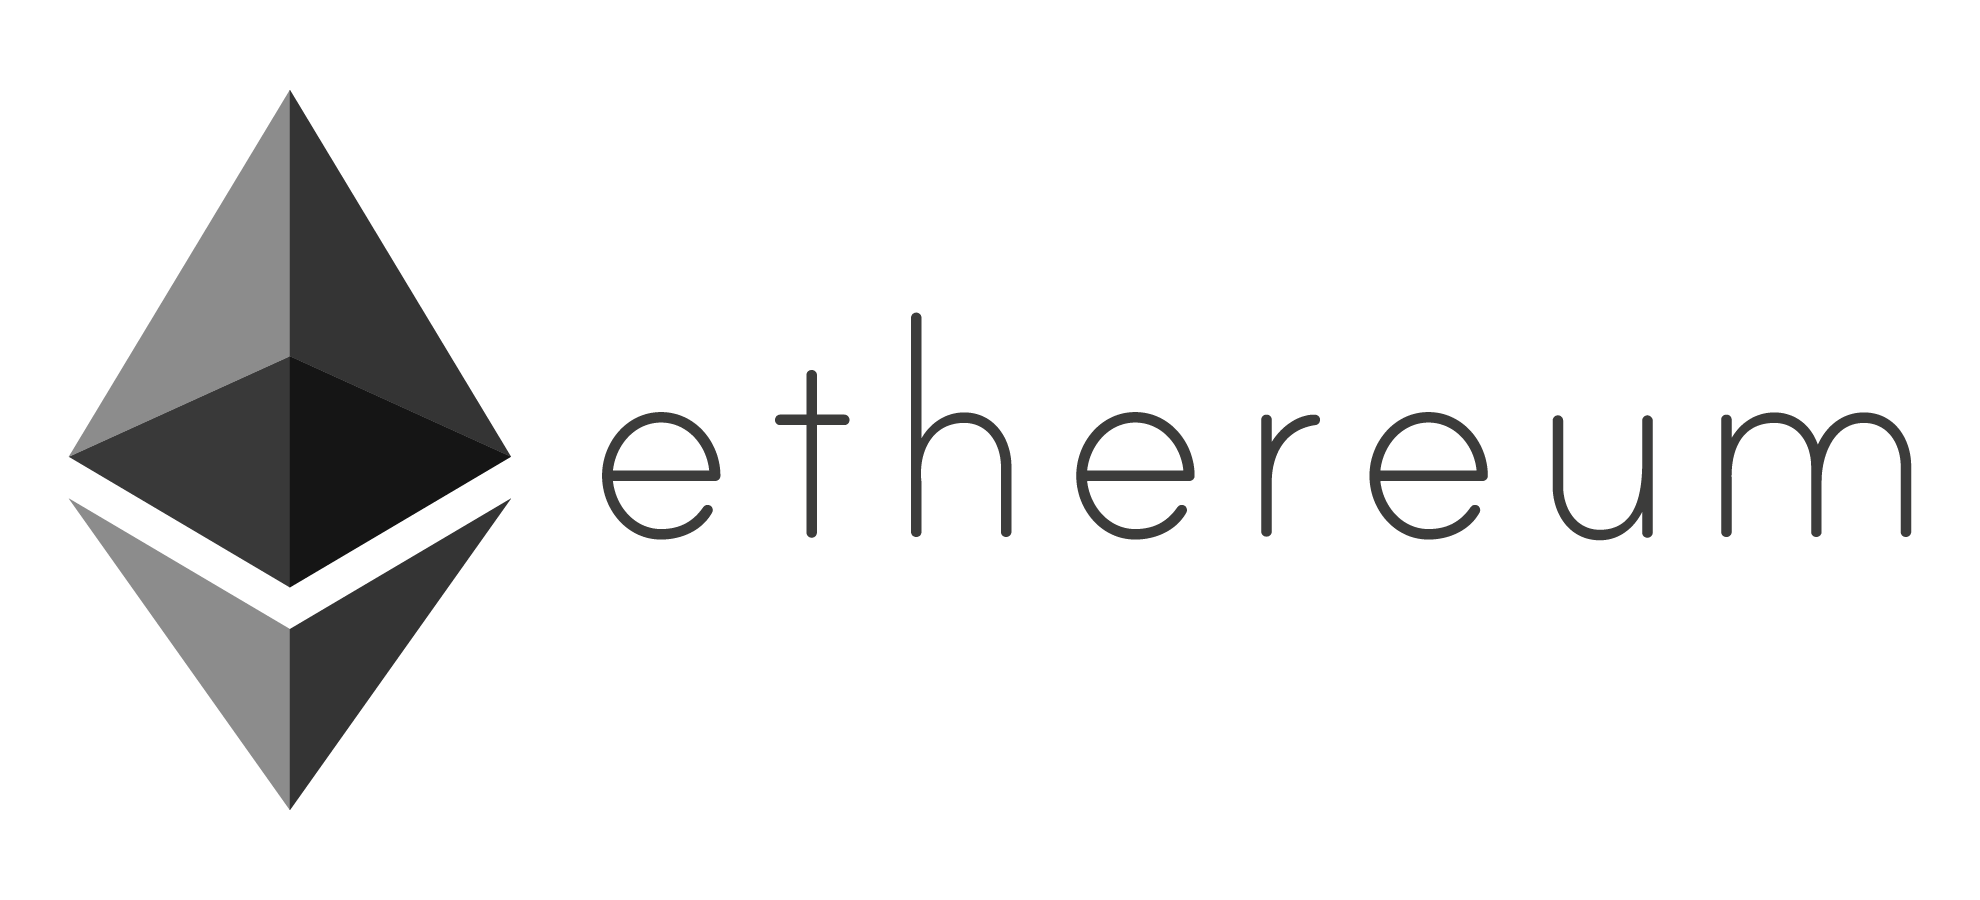 Ethereum Logo PNG Pic